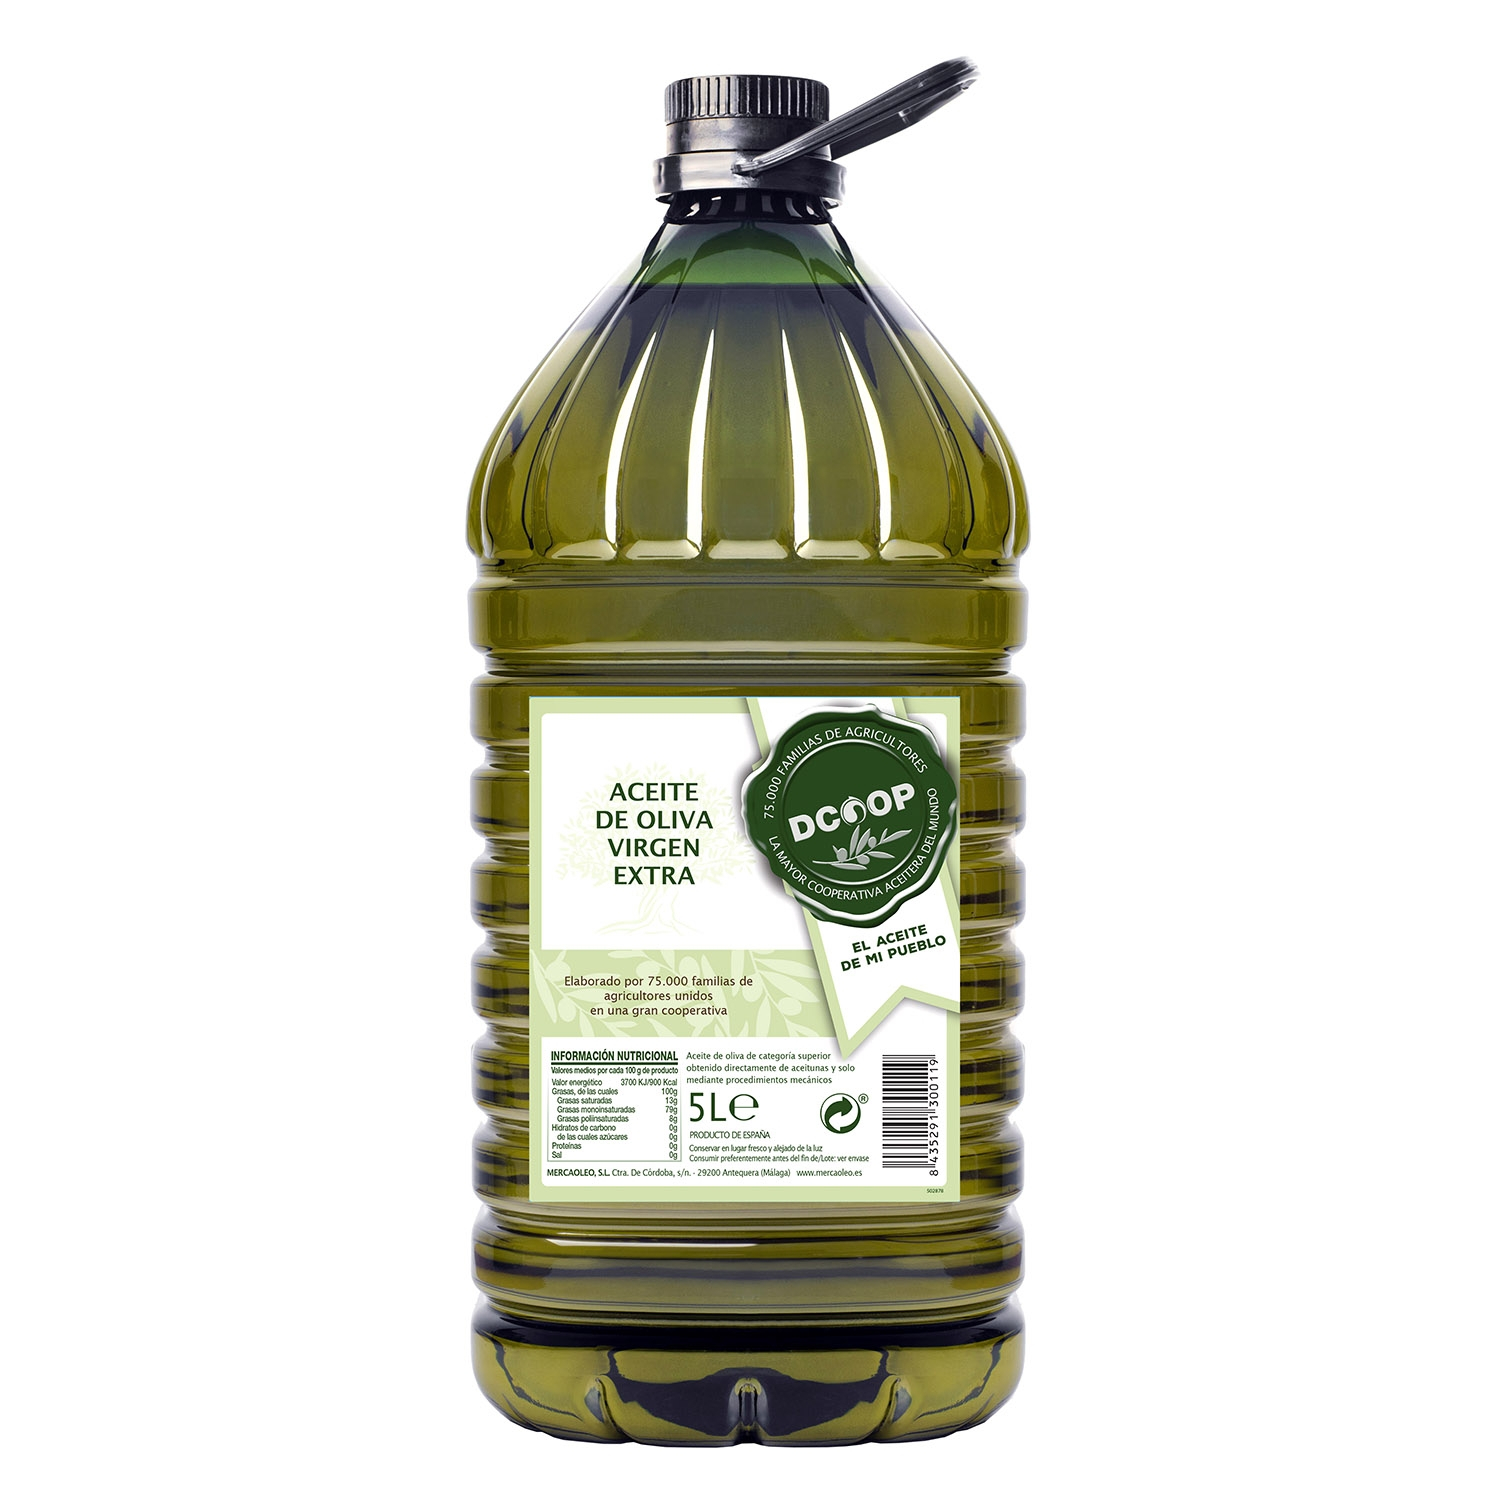 Испанское оливковое масло. Масло aceite de Oliva Virgen Extra. Испанское оливковое масло Extra Virgin. Оливковое масло 5л. Salataria оливковое масло 5л.